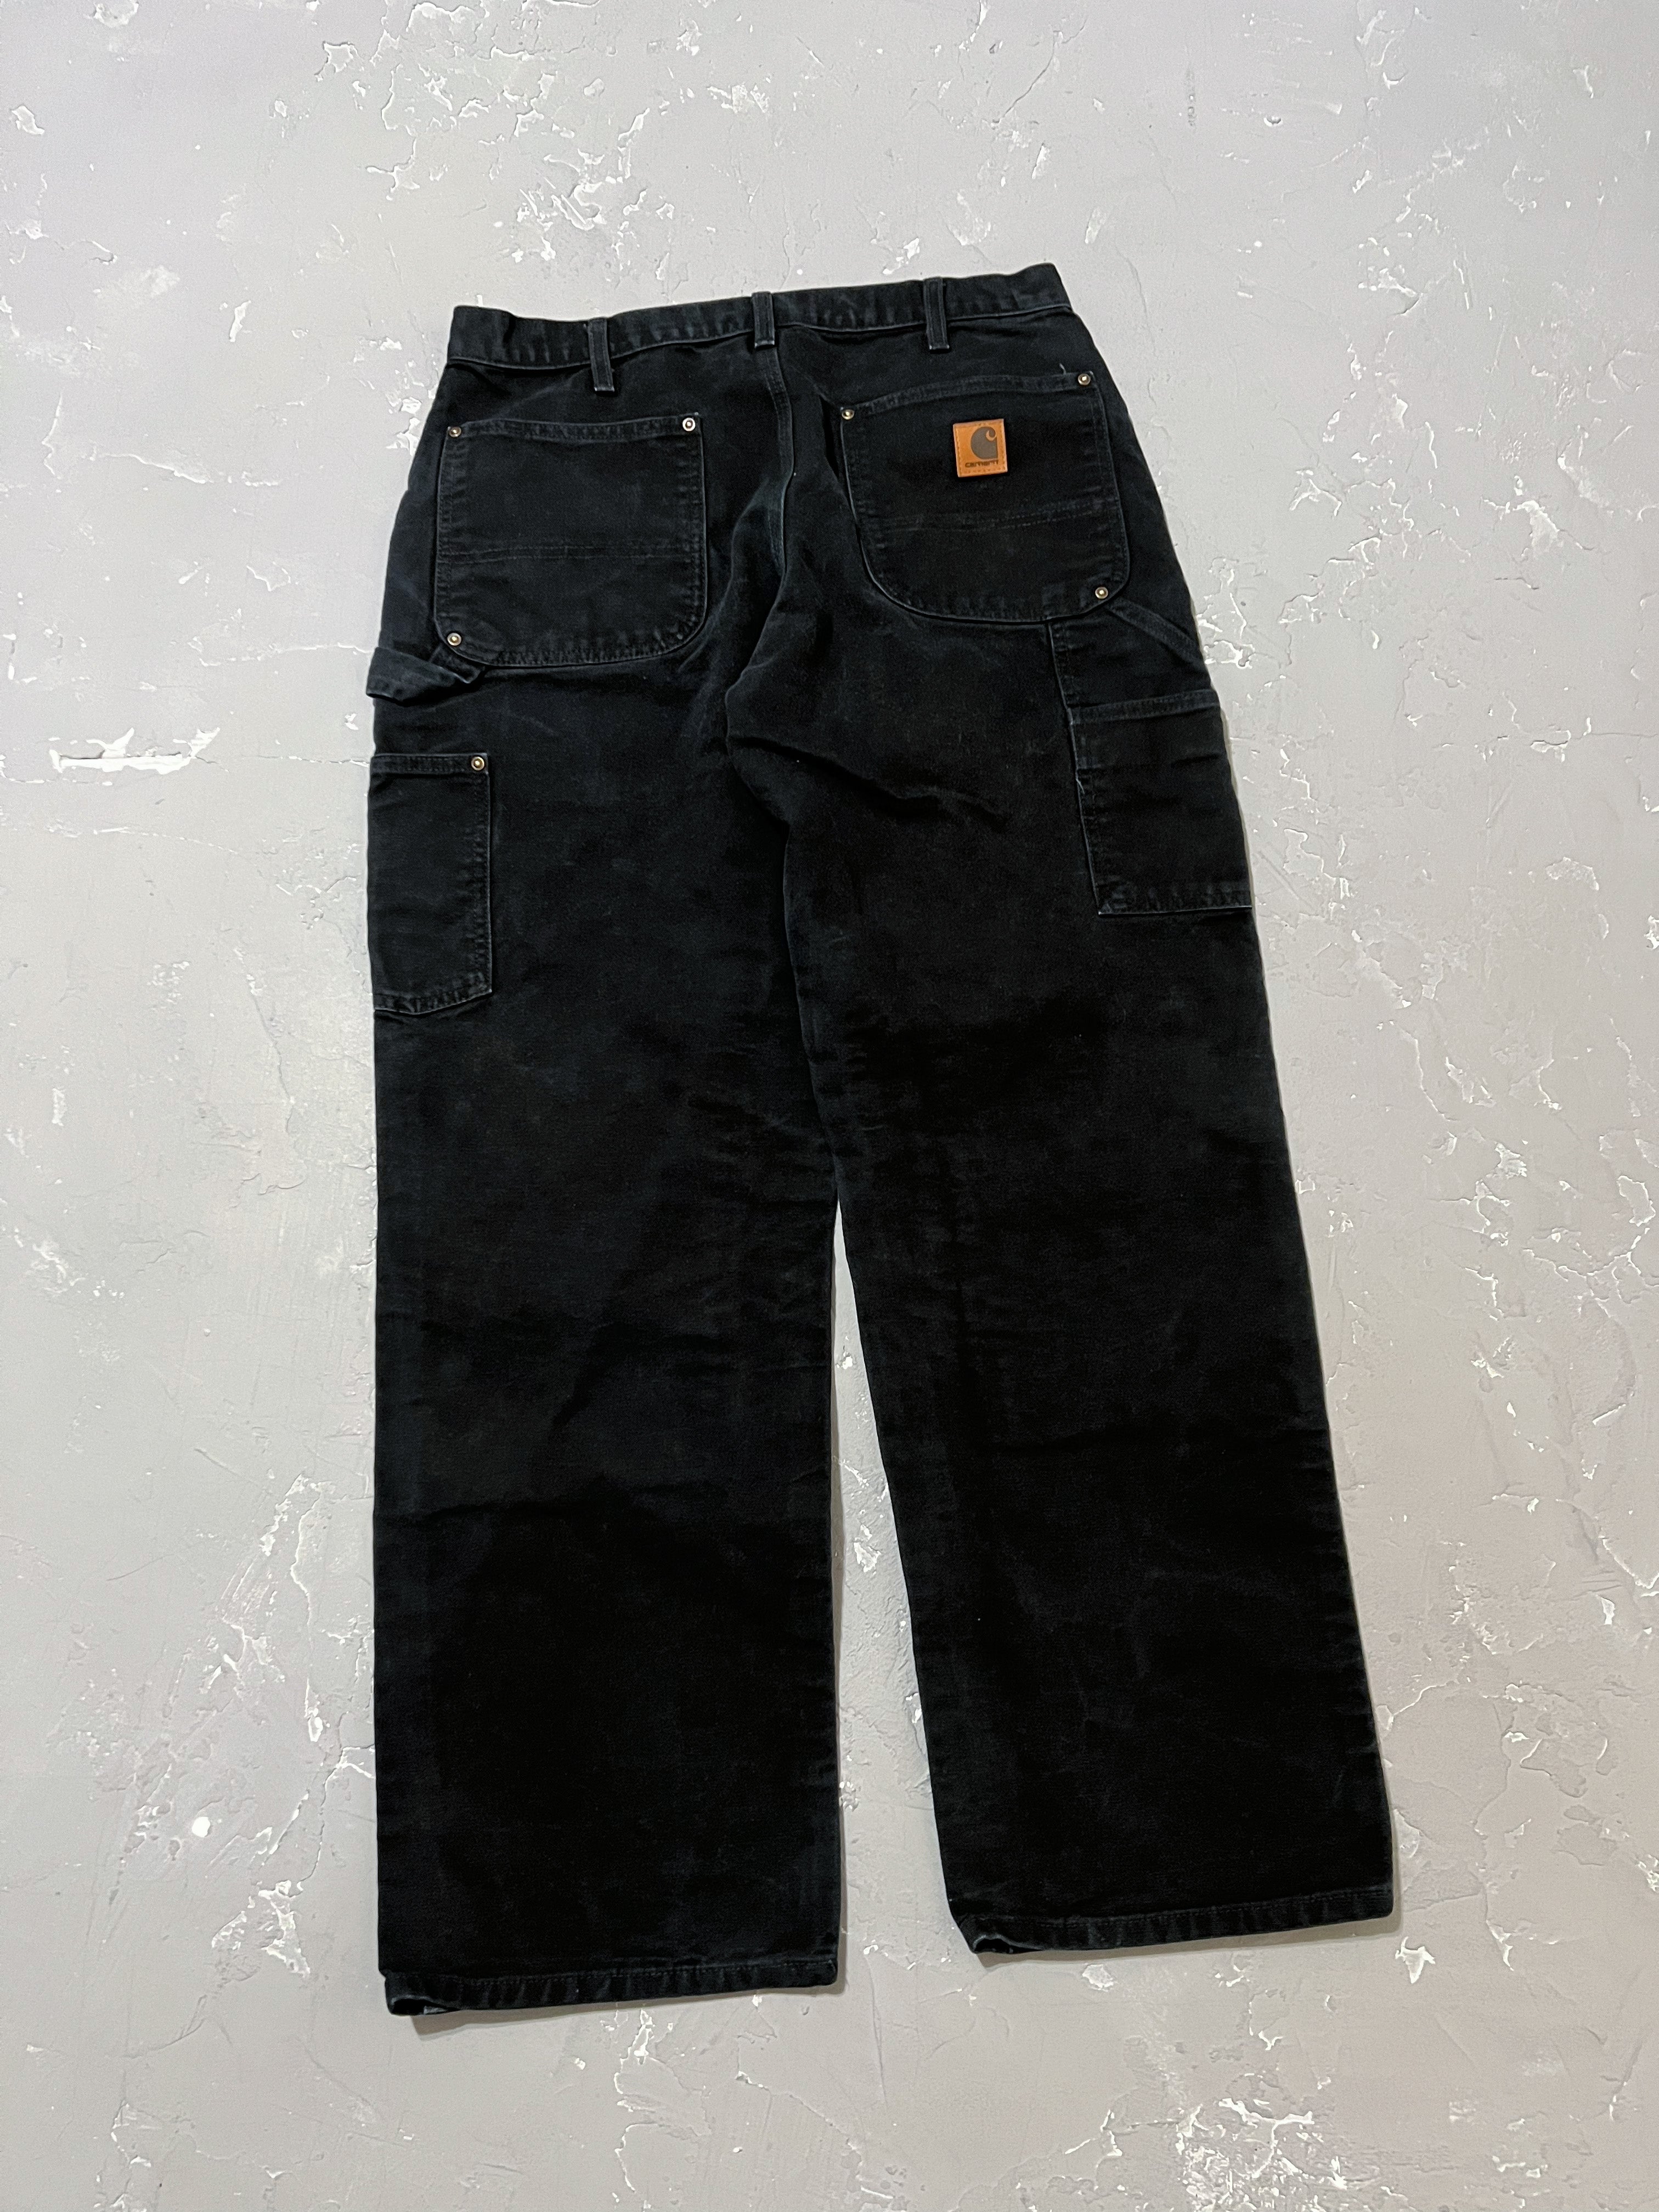 Carhartt Black Double Knee Pants [32 x 30]